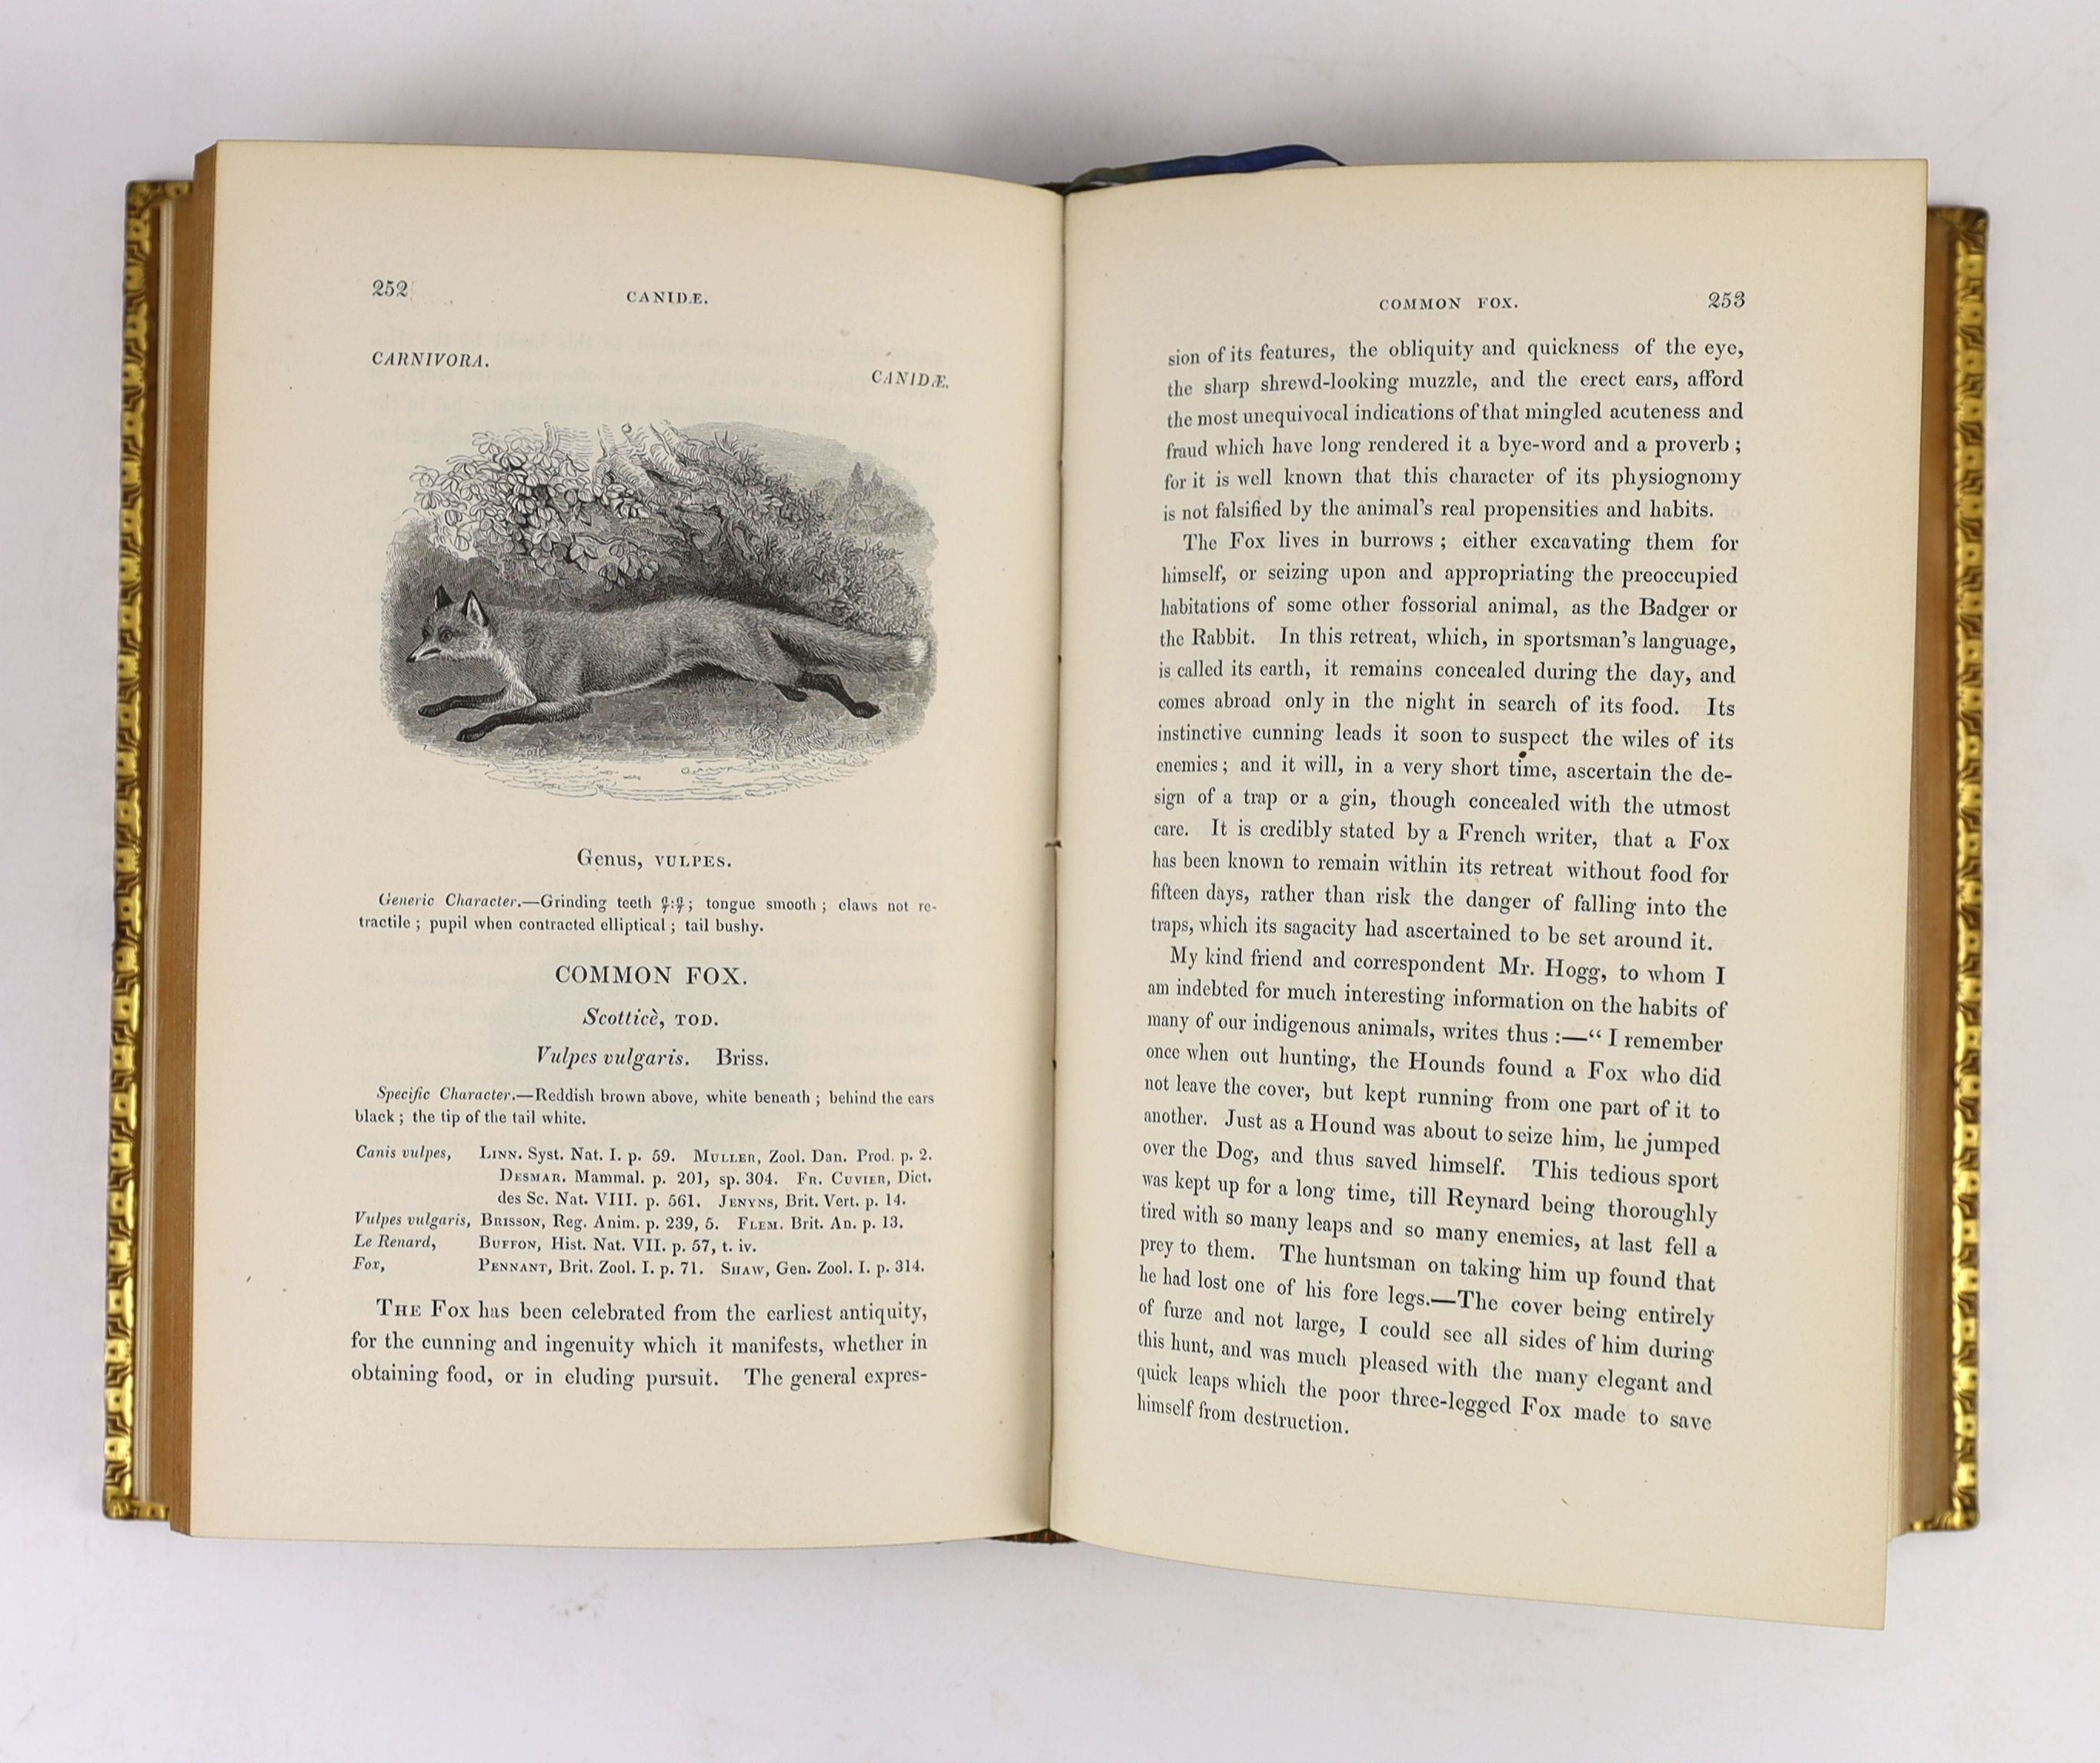 Bell, Thomas - A History of British Quadrupeds, including the Cetacea, 8vo, calf, John van Voorst, London, 1837 and A History of British Reptiles, 8vo, uniformly bound, John van Voorst, London, 1839 (2)